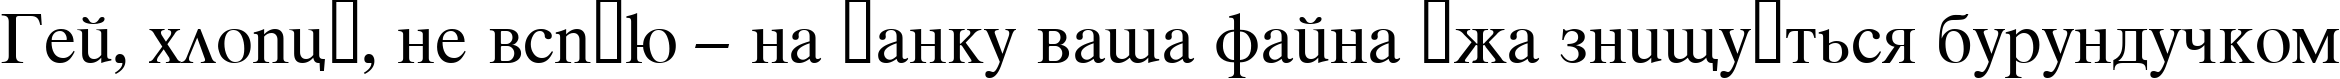 Пример написания шрифтом Tracia текста на украинском